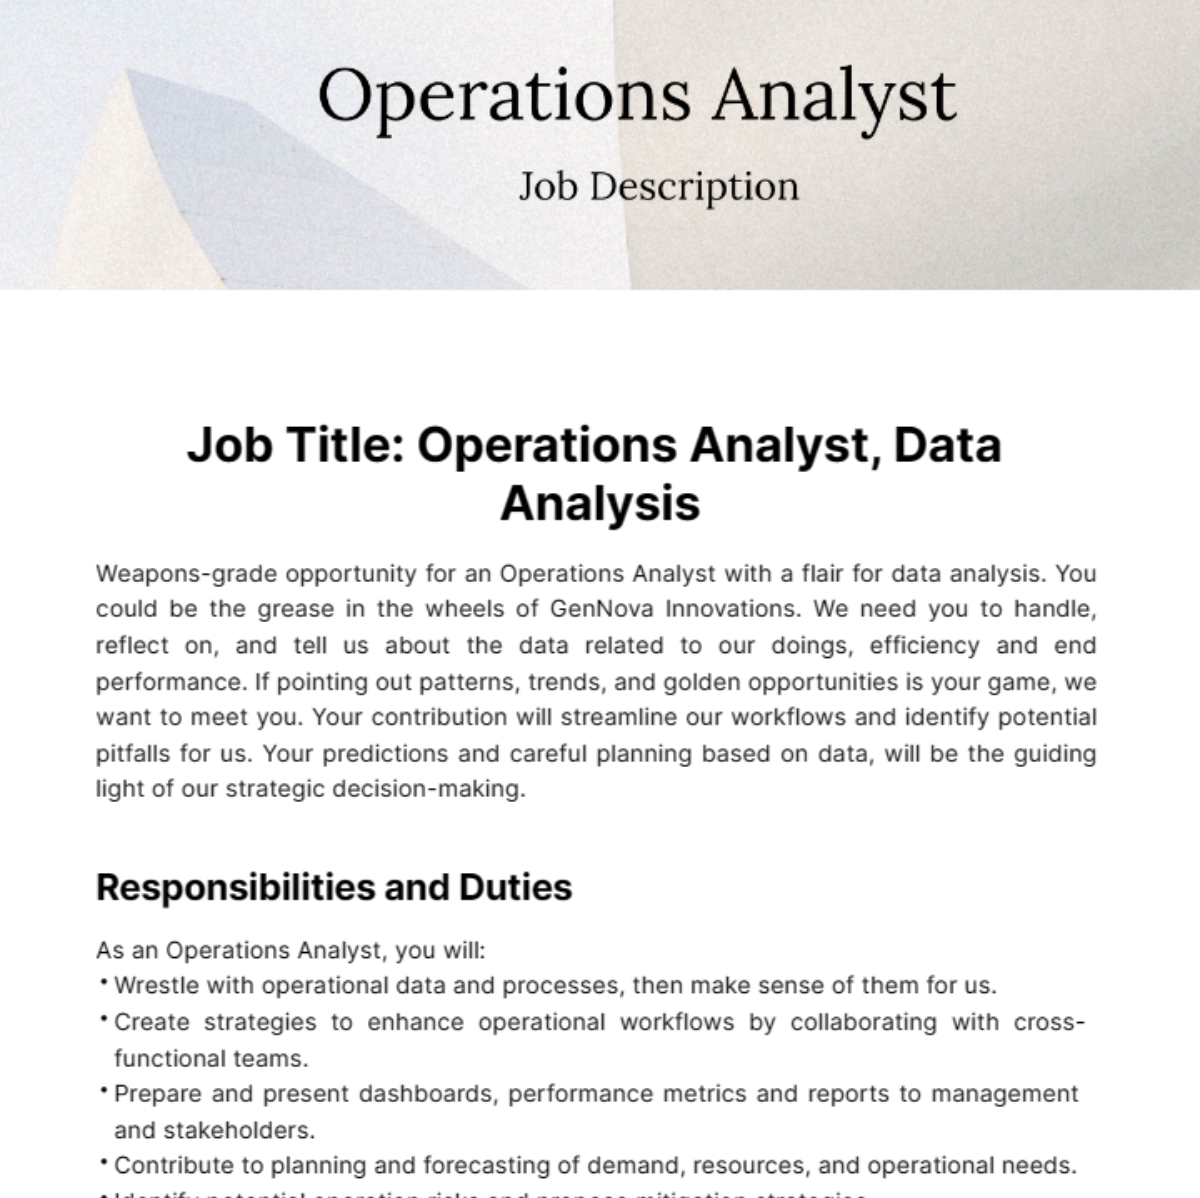 Operations Analyst Job Description Template